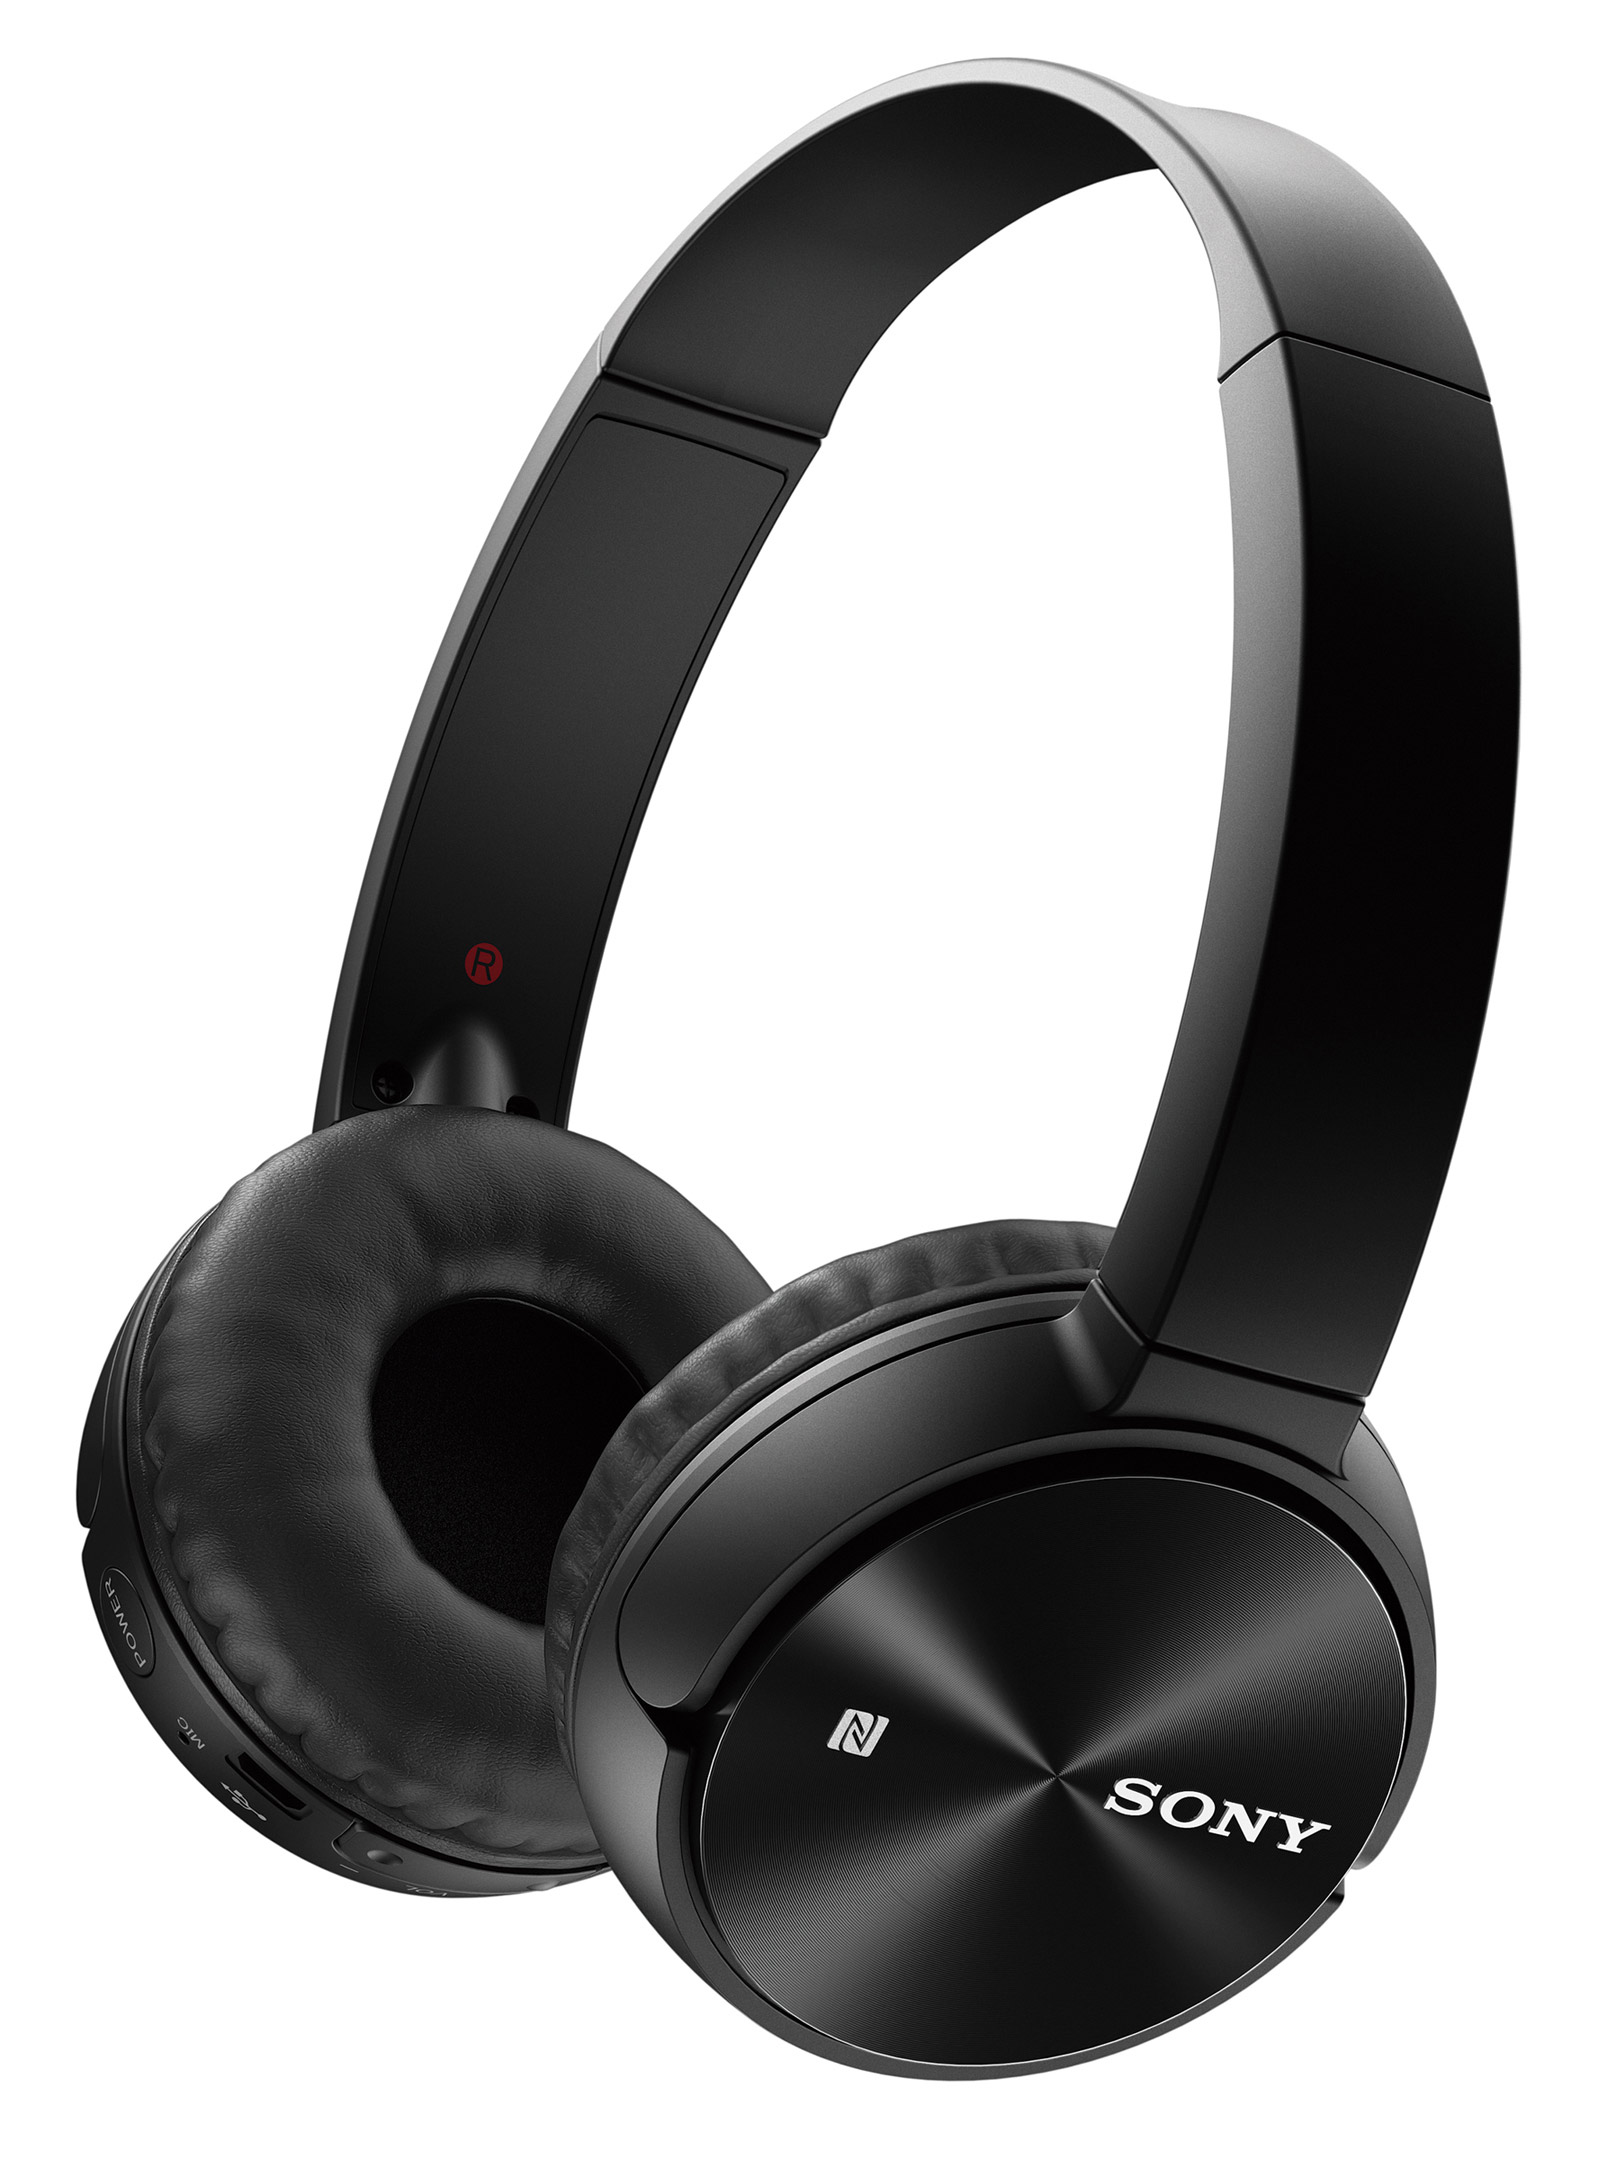 Draadloze hoofdtelefoon Sony MDRZX330 Bluetooth 4905524991826